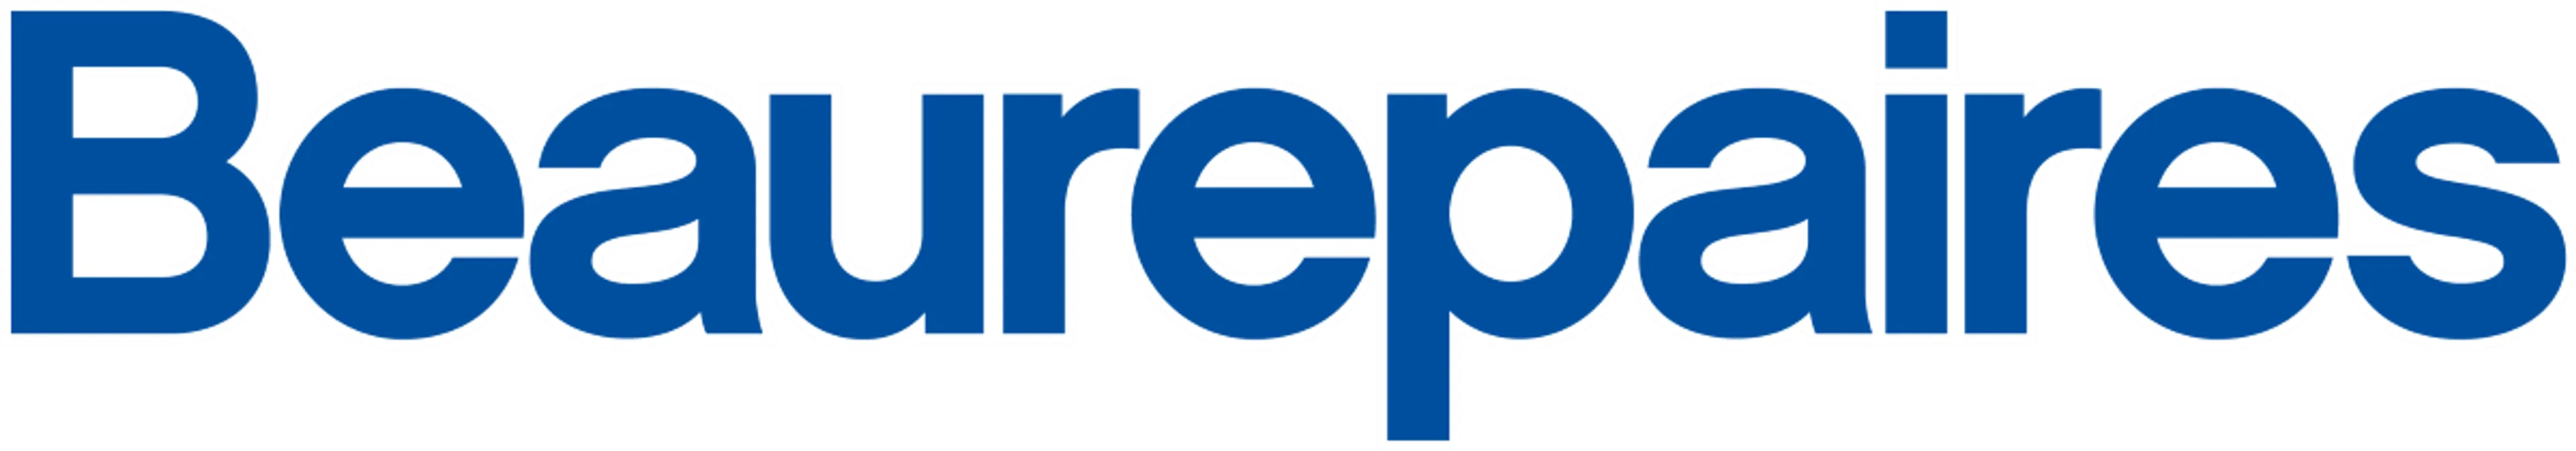 BEAUREPAIRES logo